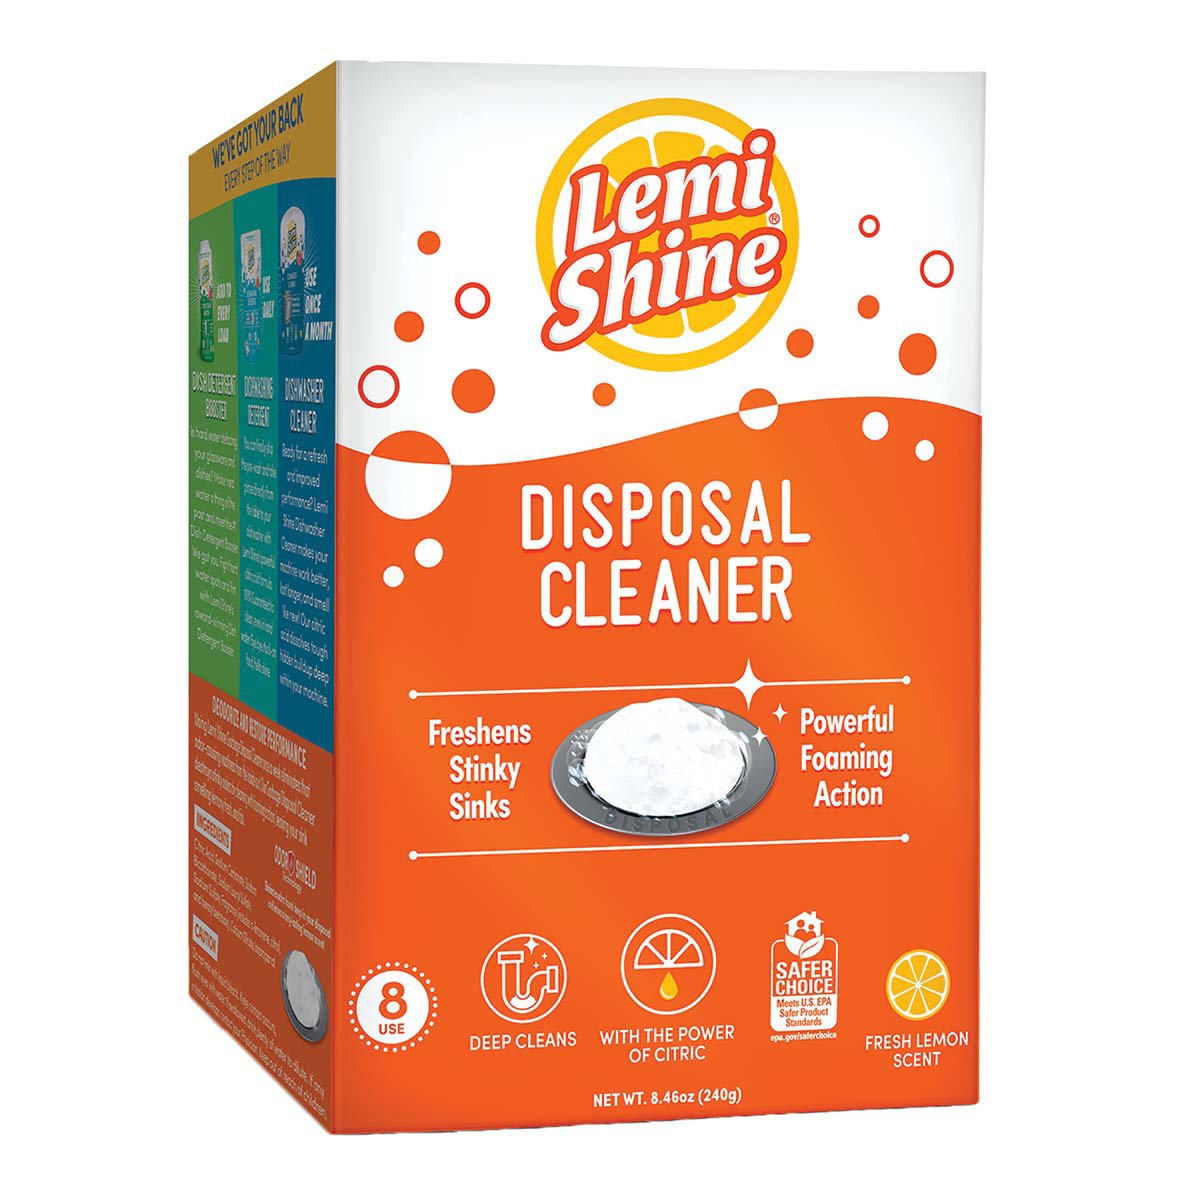 Lemi Shine 4-Count Washing Machine Cleaner Powder in the Washing